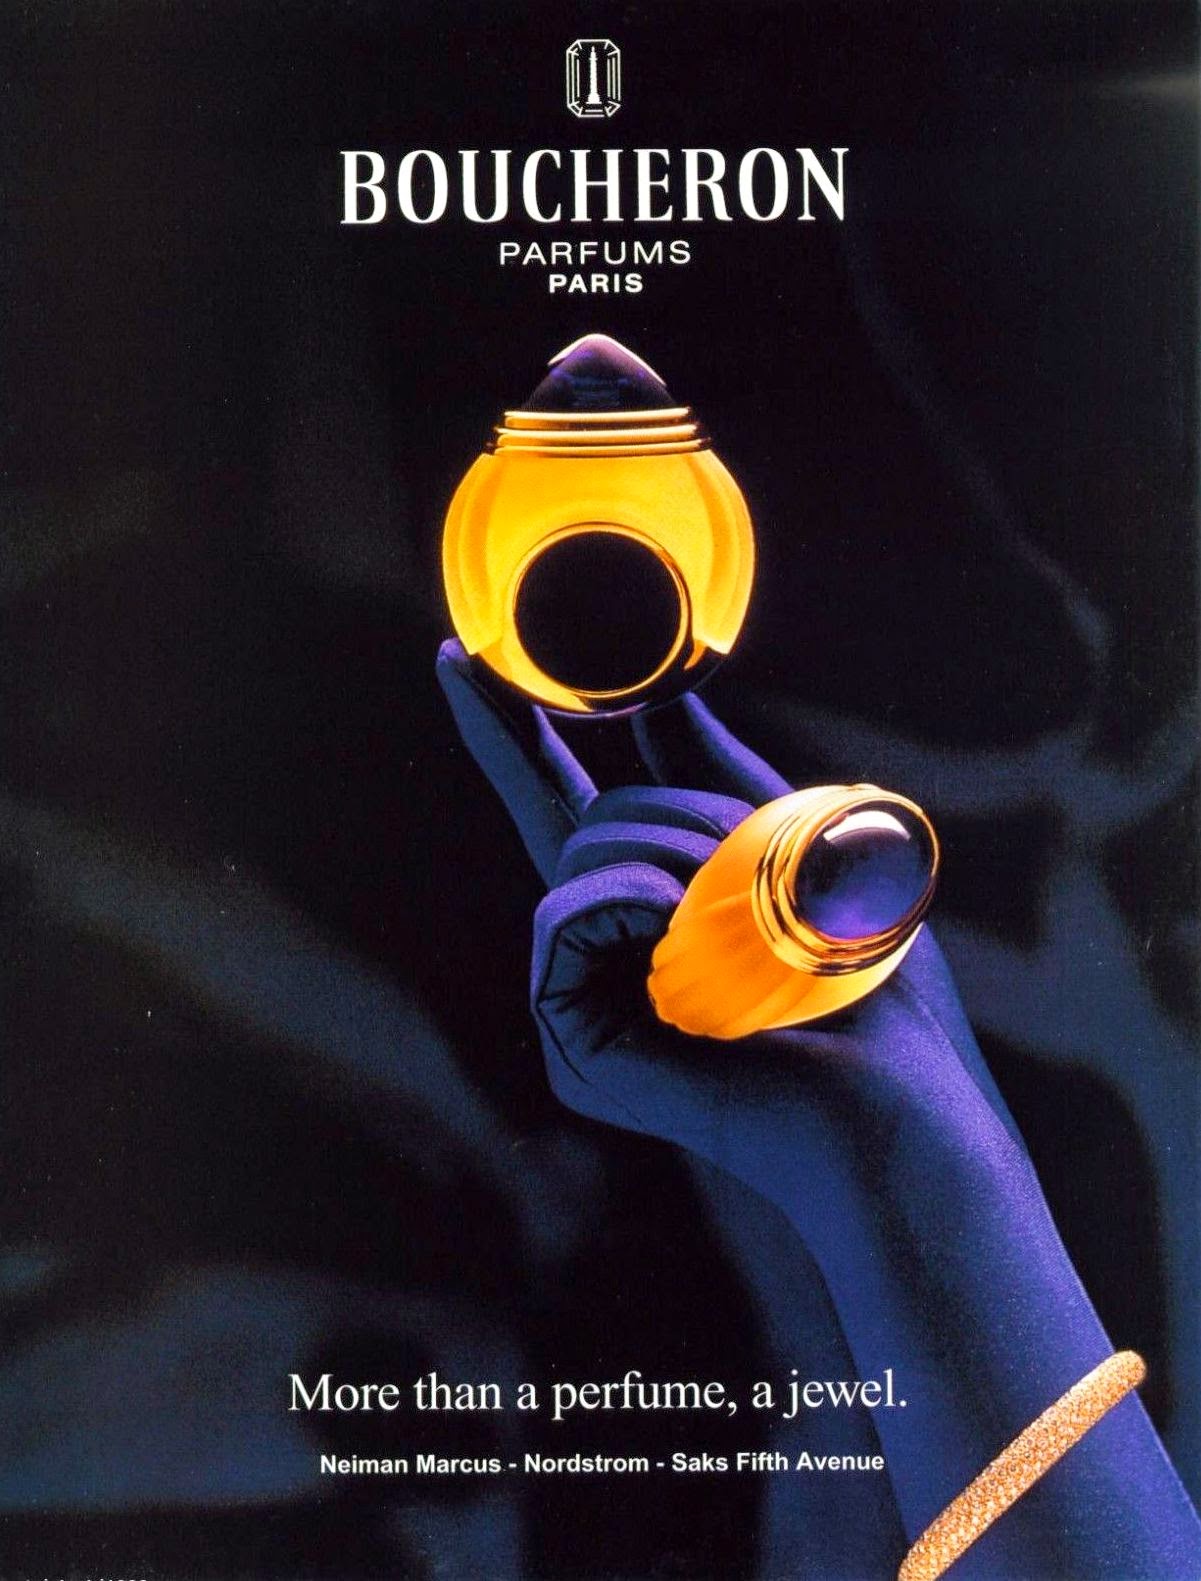 Cleopatra's Boudoir: Hypnotic Poison by Christian Dior c1998